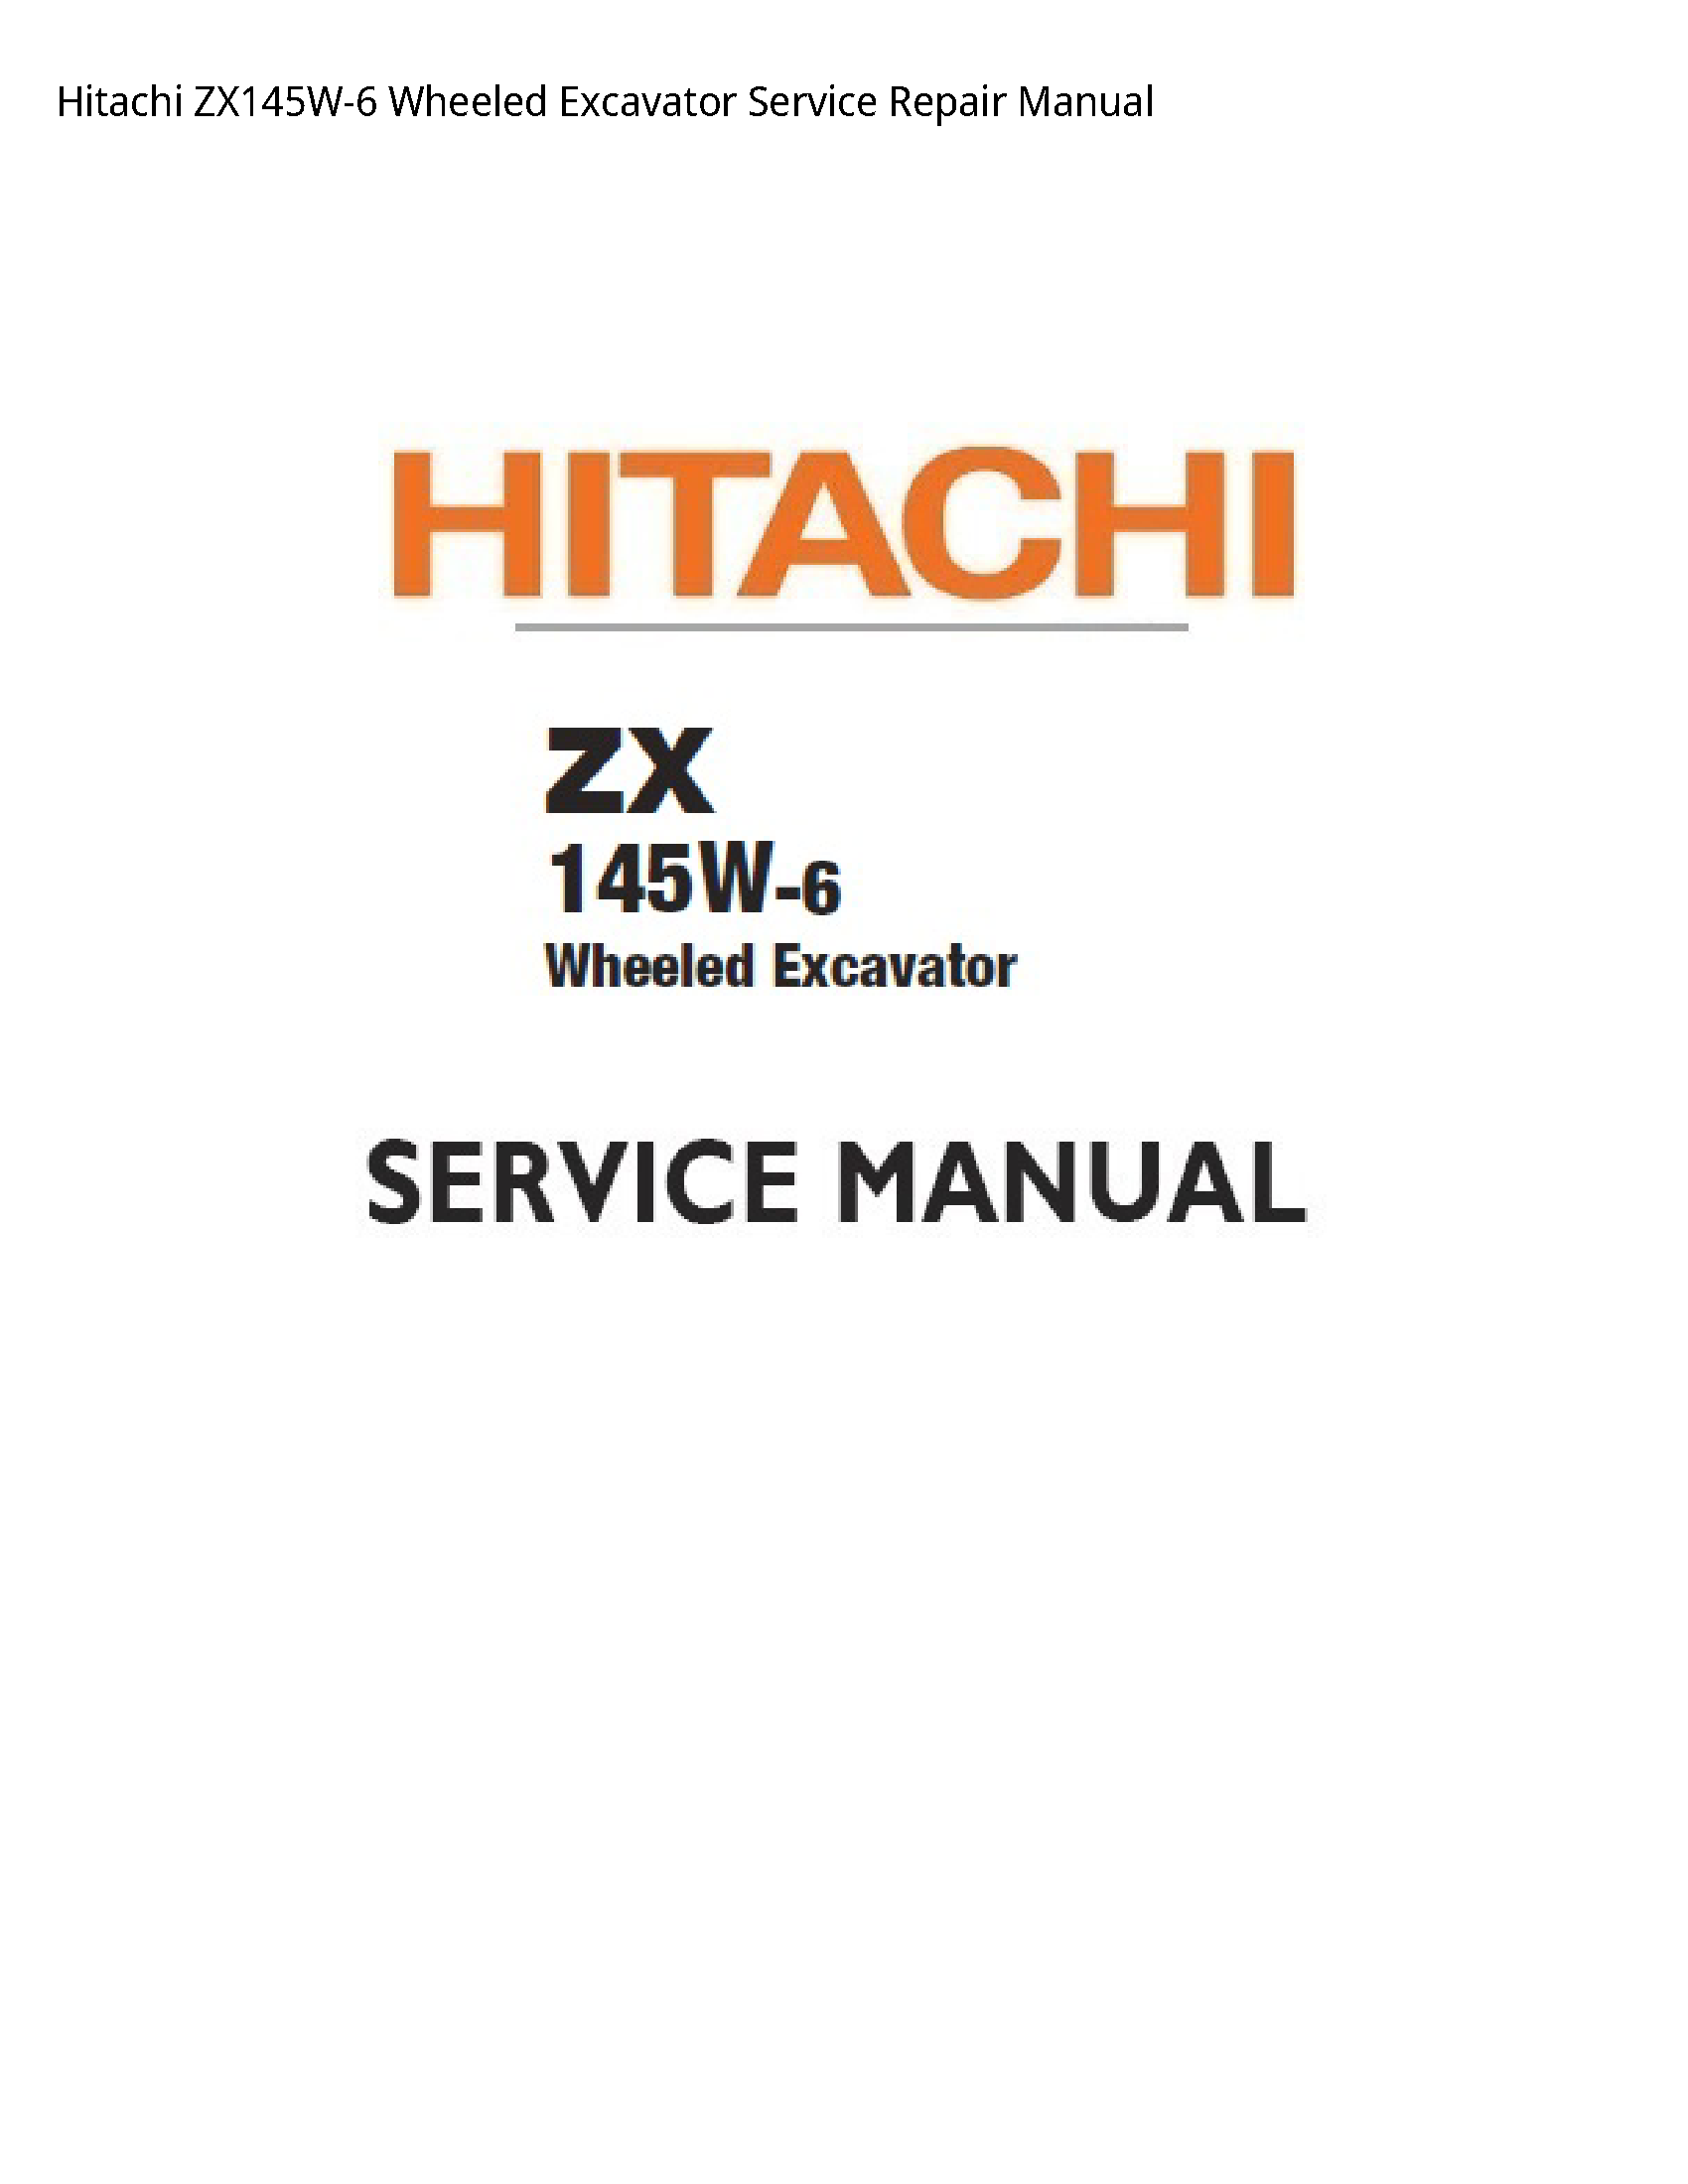 Hitachi ZX145W-6 Wheeled Excavator manual